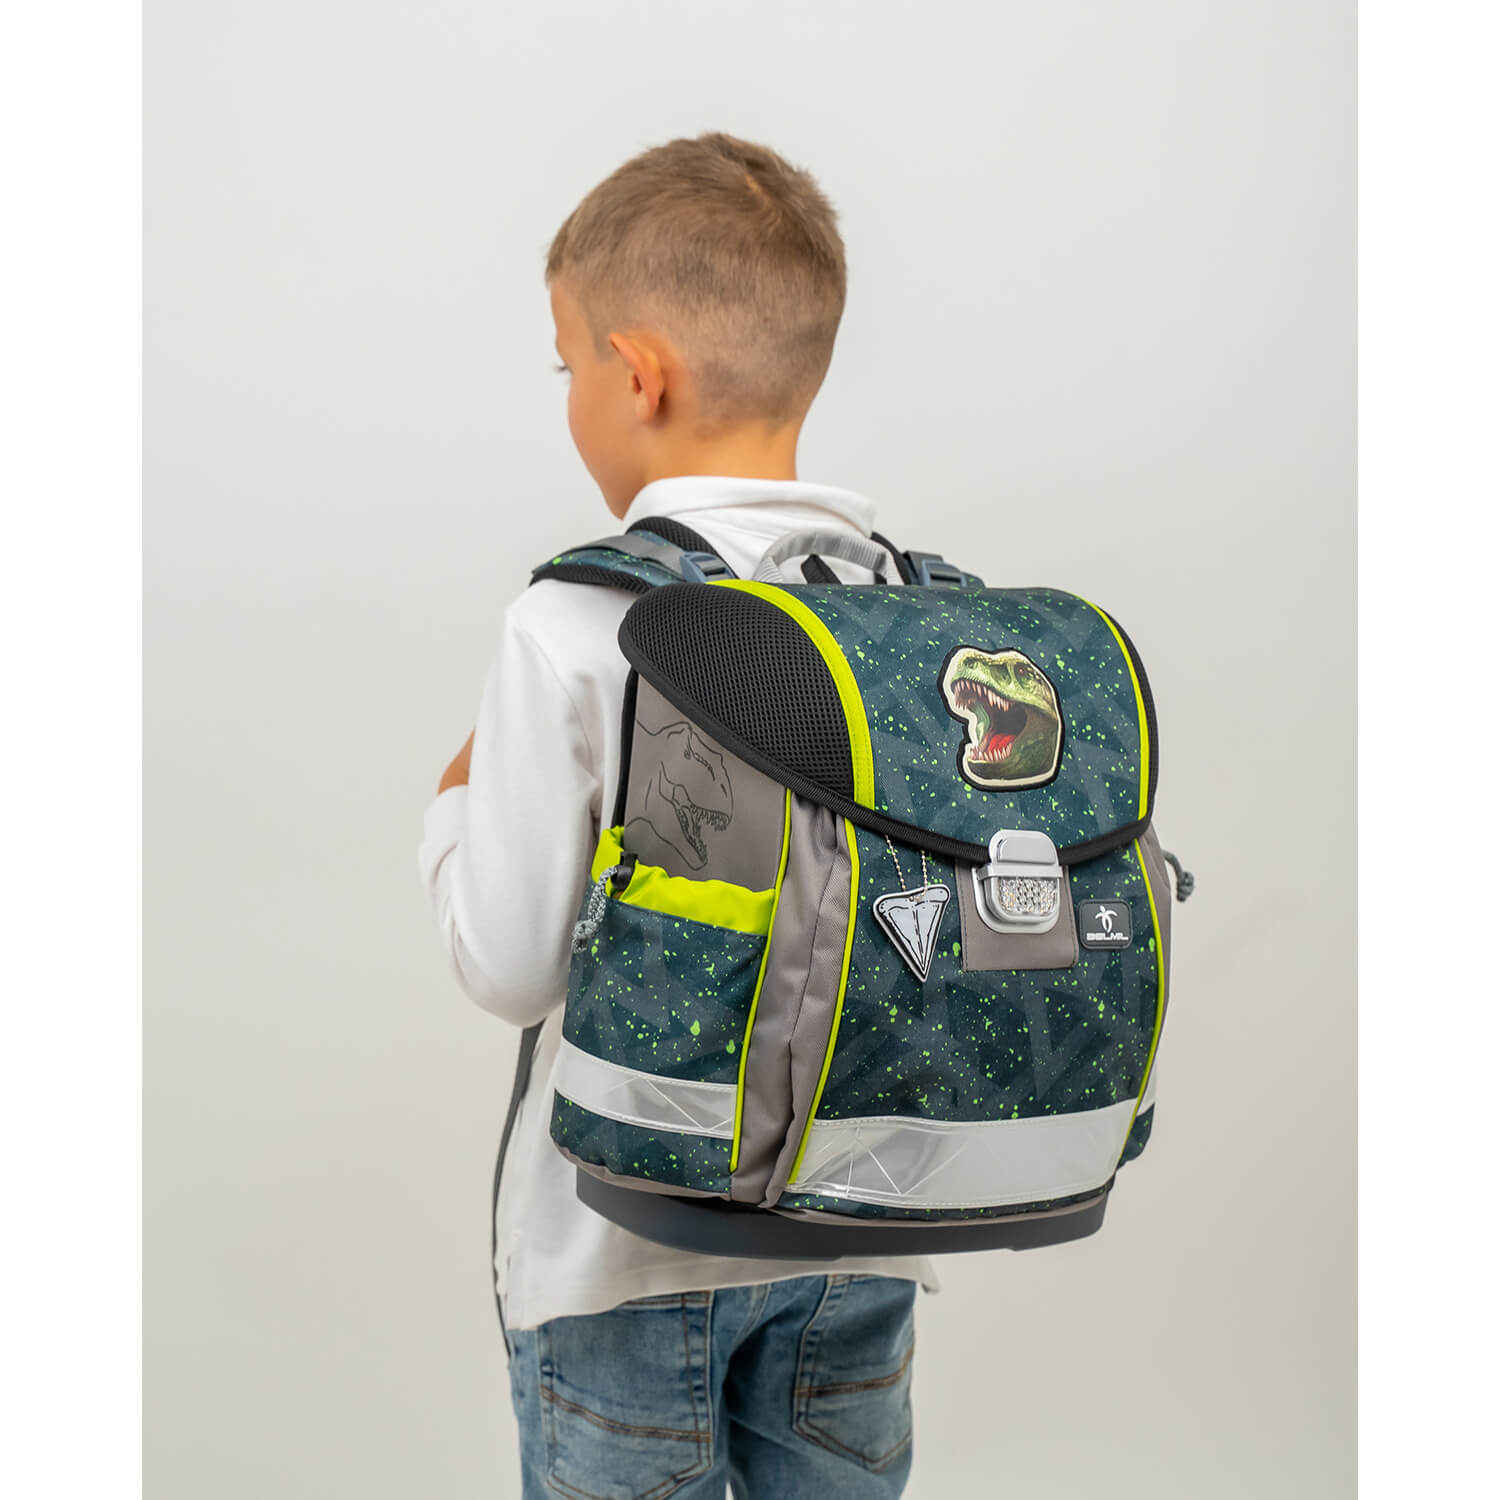 Classy T-Rex Roar schoolbag set 5 pcs with GRATIS keychain